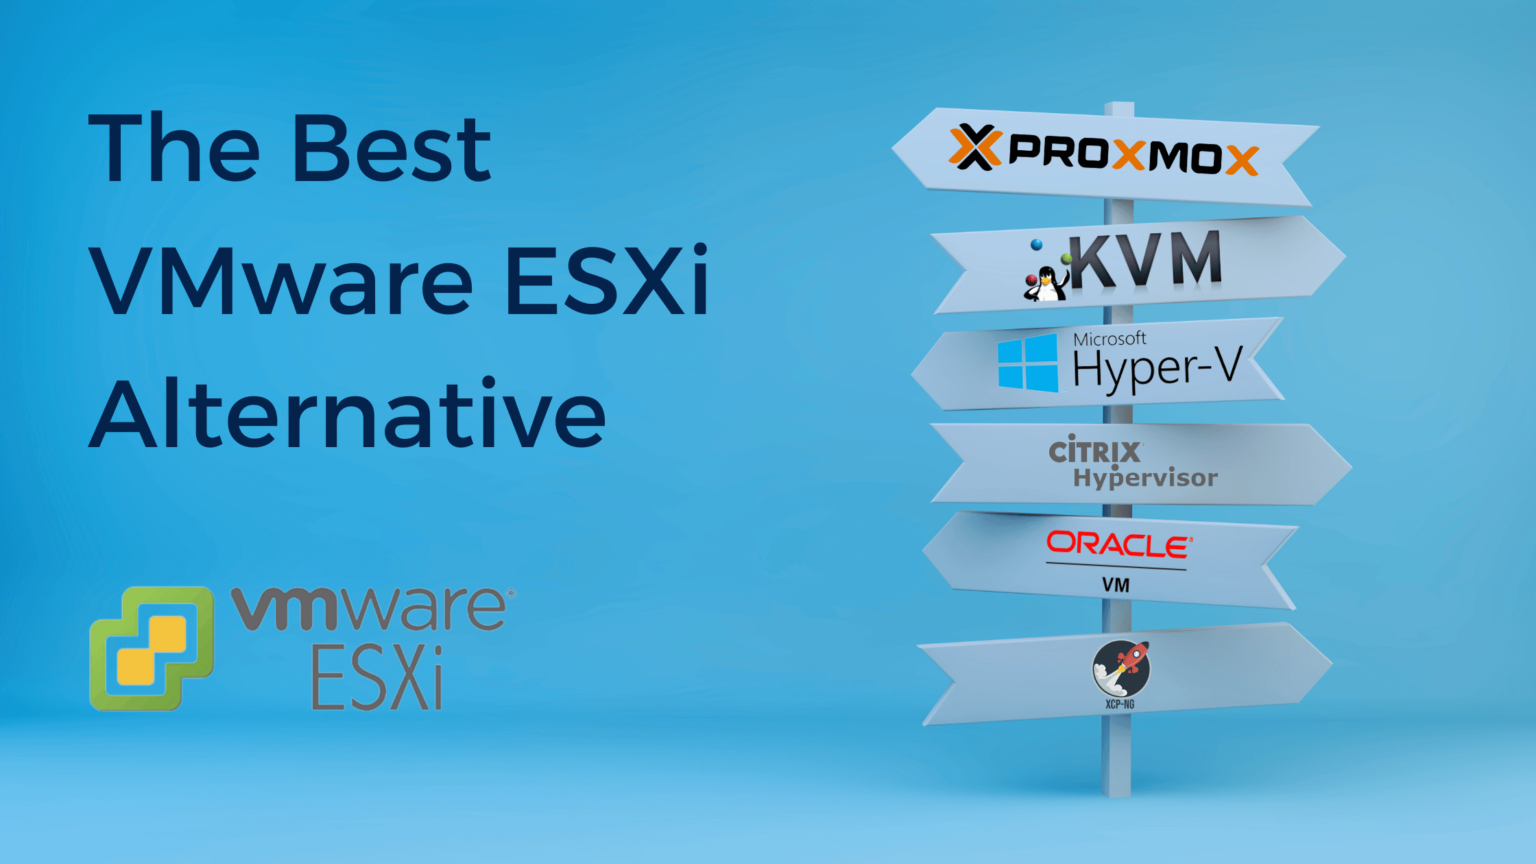 The Best VMware ESXi Alternative